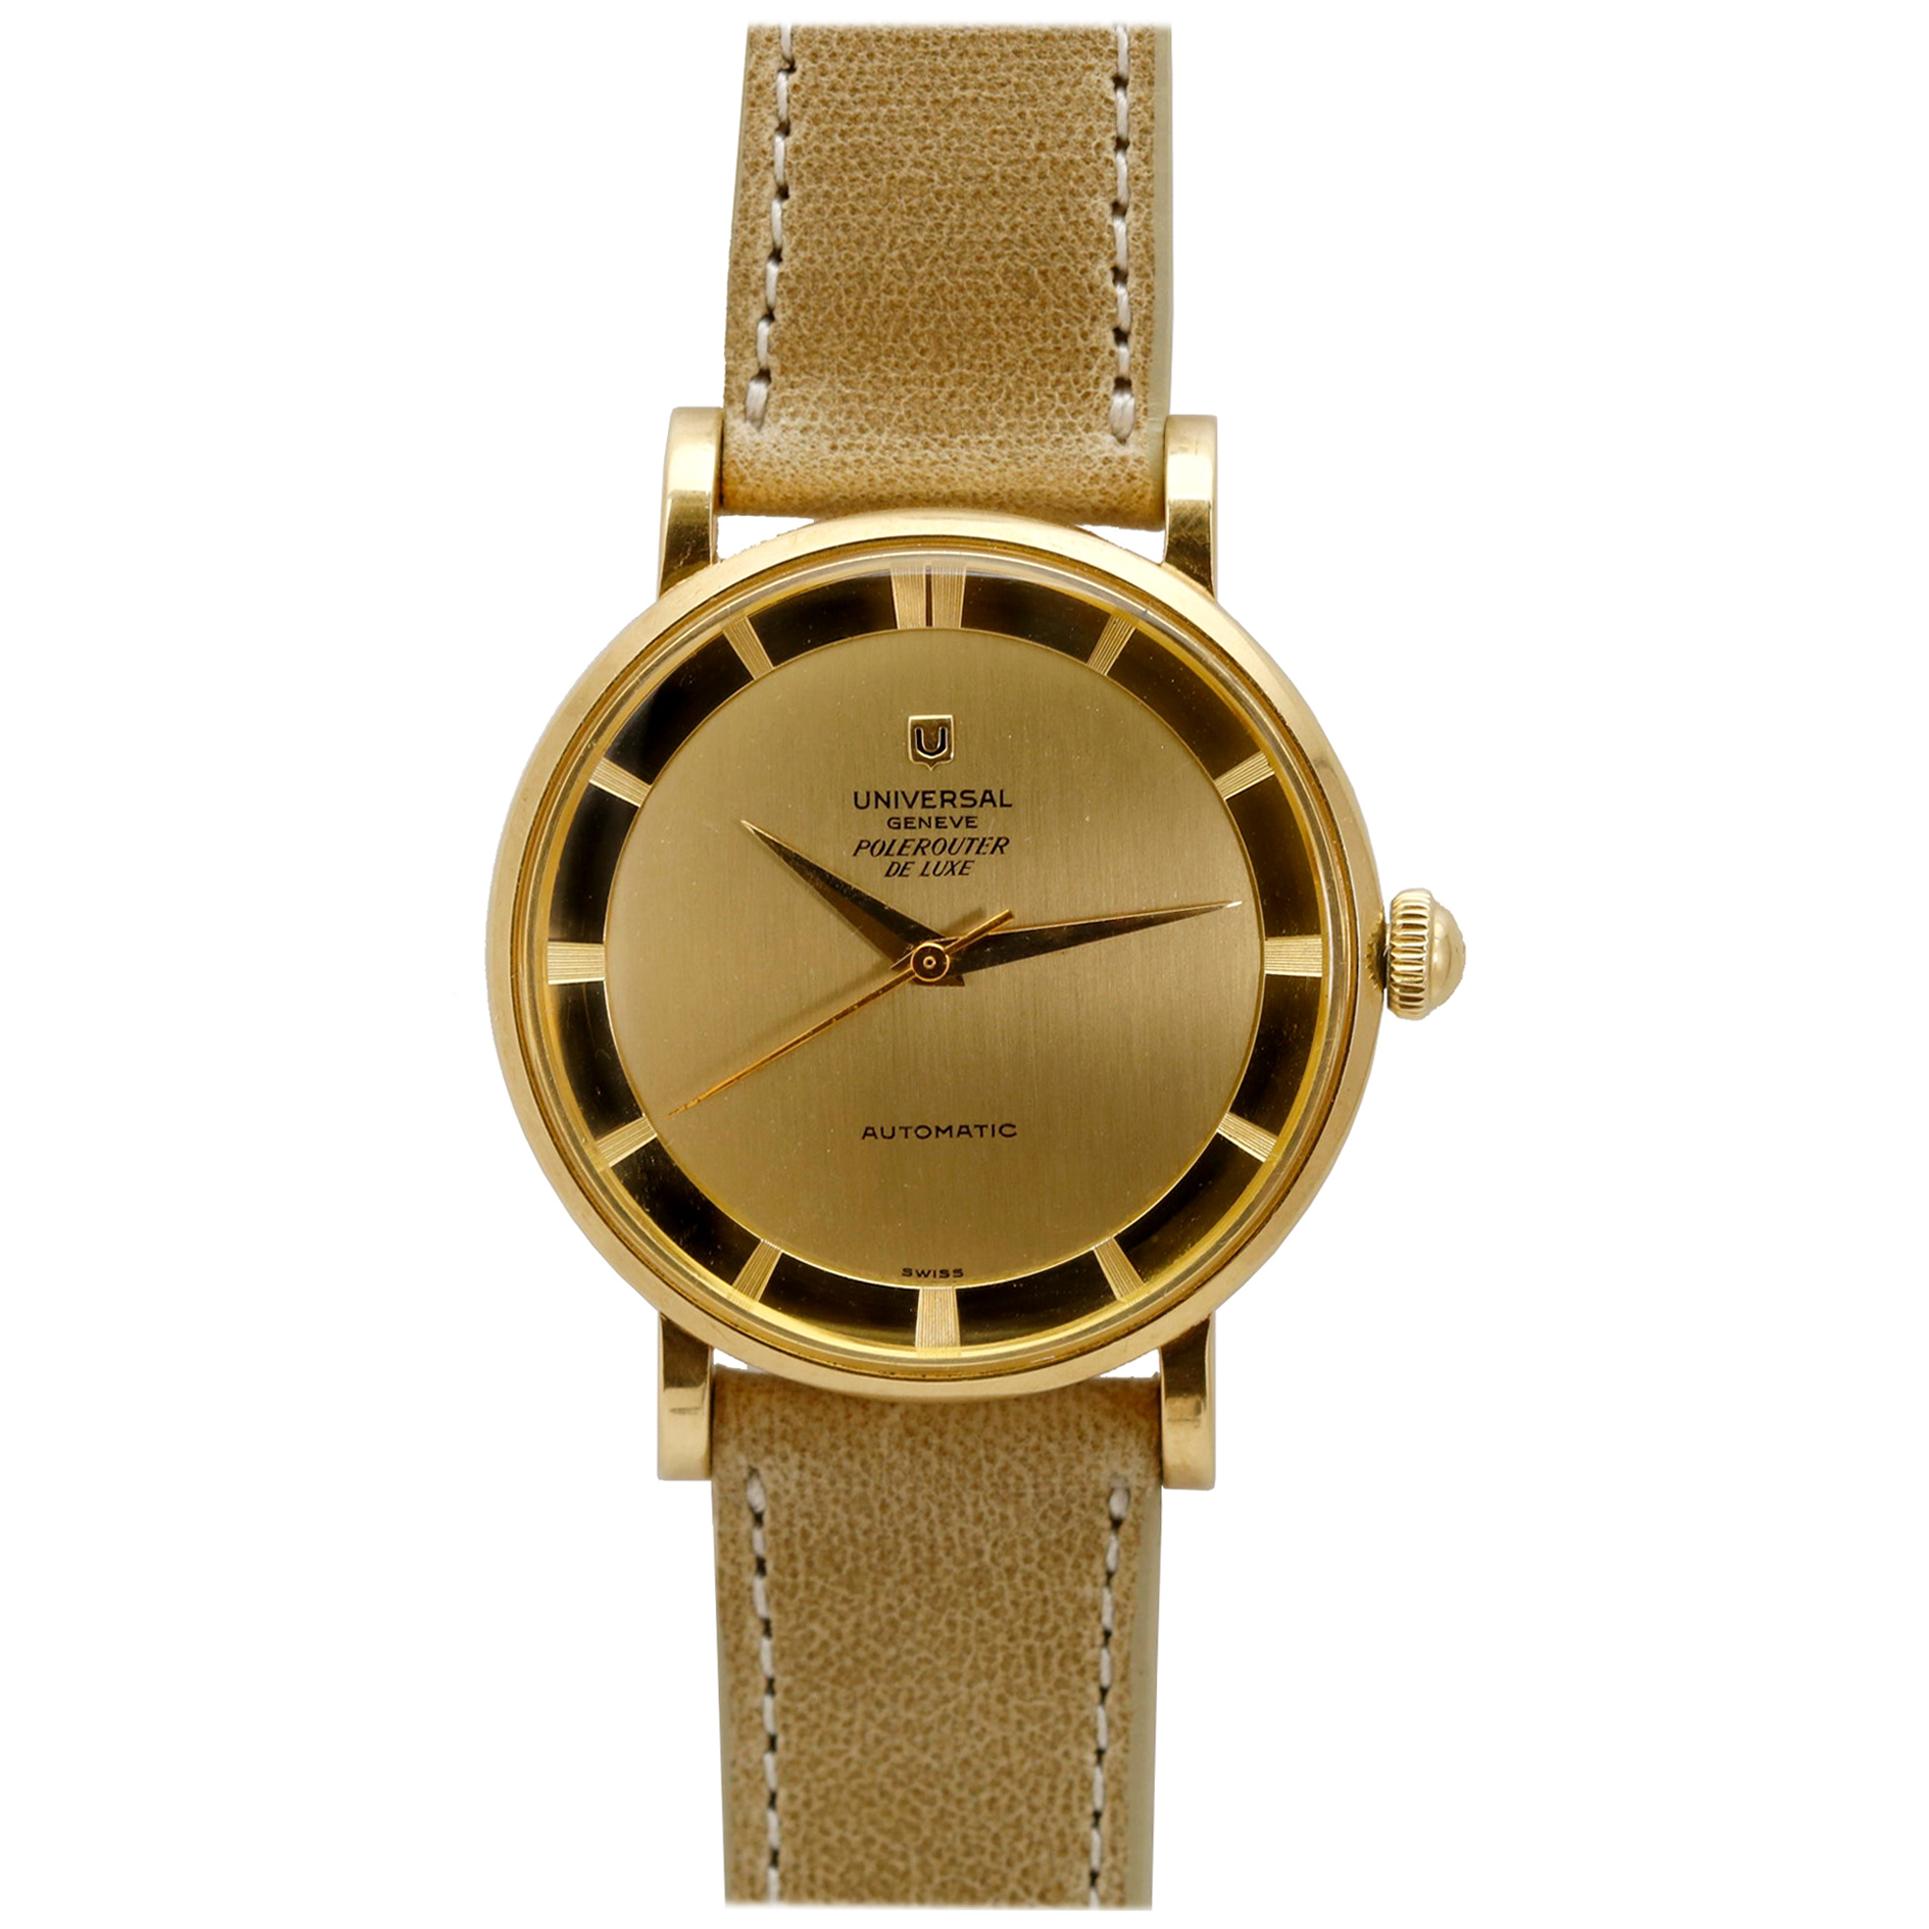 Universal Geneve Polerouter De Luxe Ref B10234 1 Yellow Gold Wristwatch c. 1950